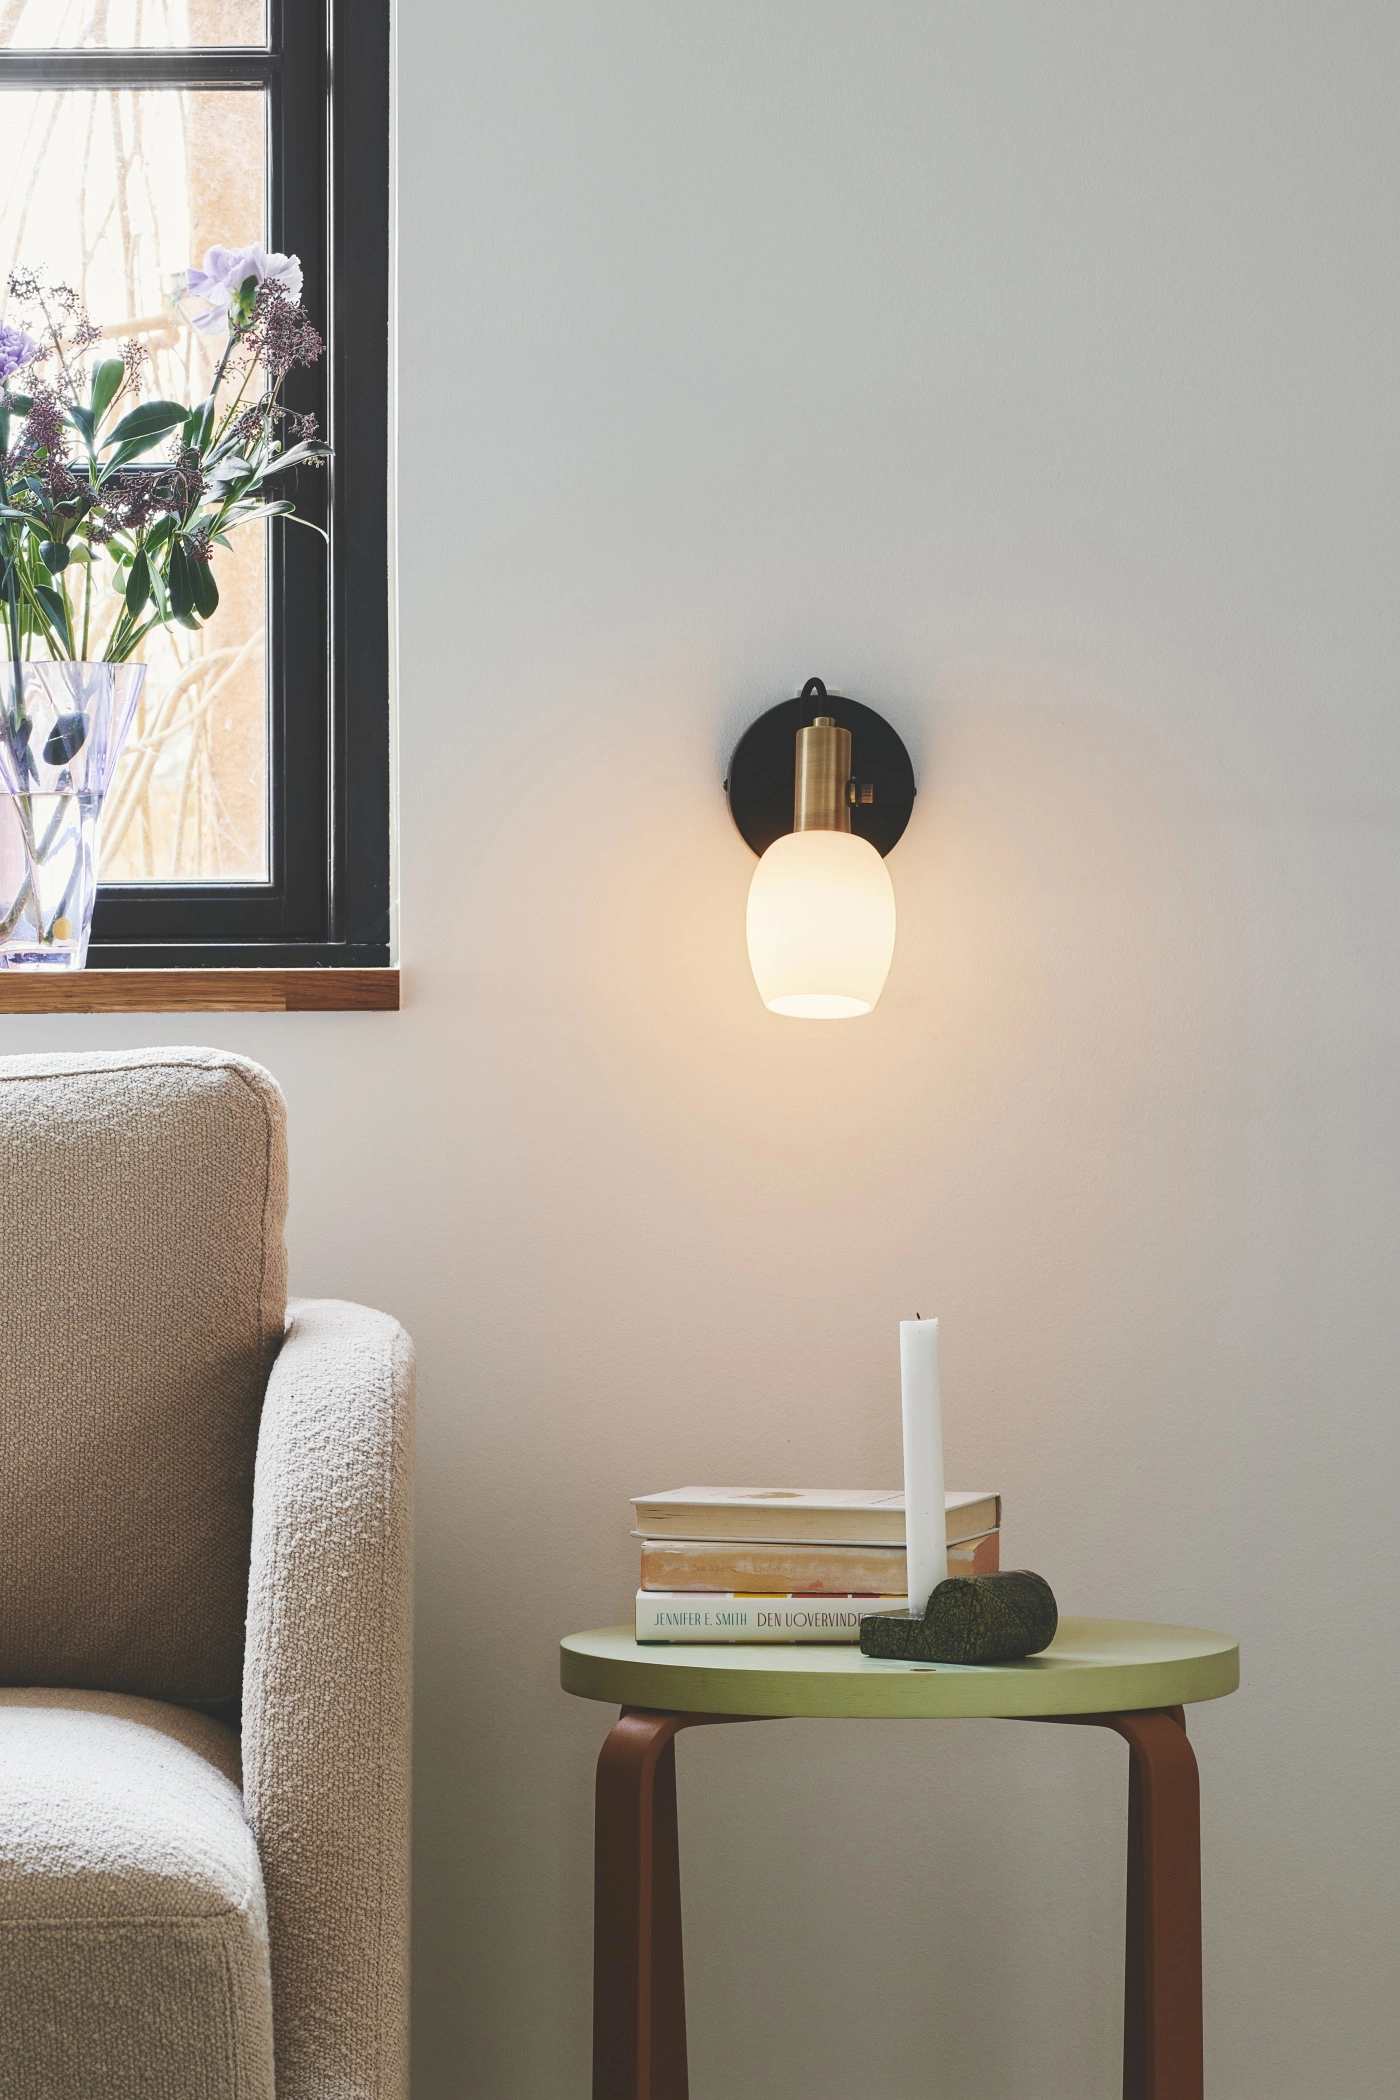   
                        
                        Бра NORDLUX (Дания) 59575    
                         в стиле Модерн.  
                        Тип источника света: светодиодная лампа, сменная.                                                 Цвета плафонов и подвесок: Белый.                         Материал: Стекло.                          фото 2